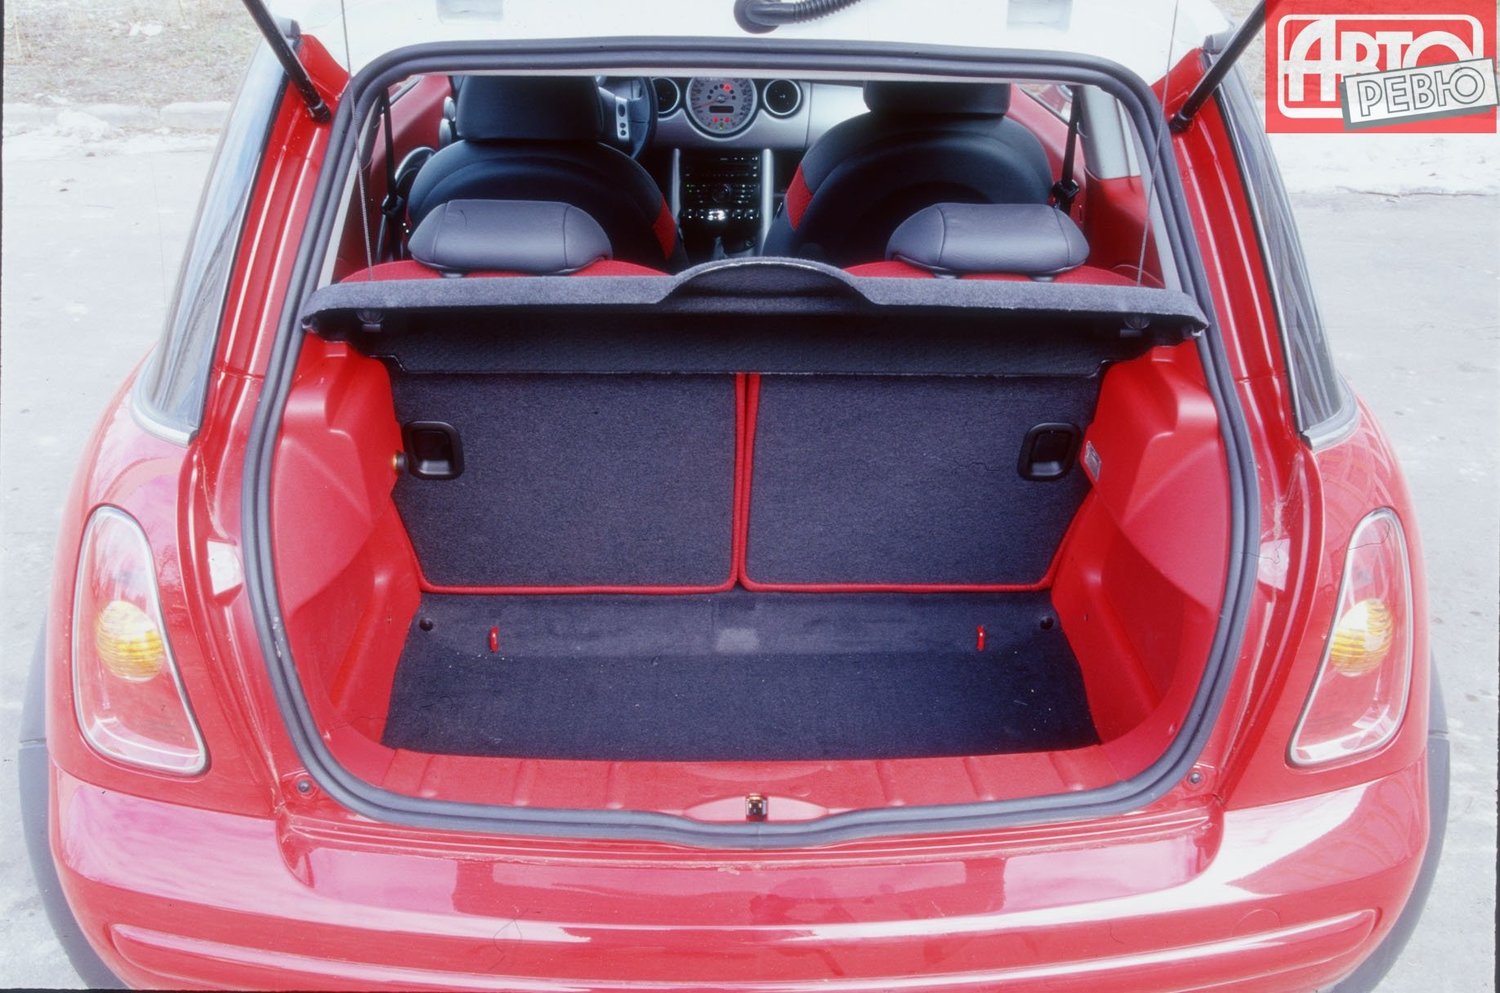 хэтчбек 3 дв. Cooper S MINI Hatch 2001 - 2006г выпуска модификация 1.6 AT (170 л.с.)